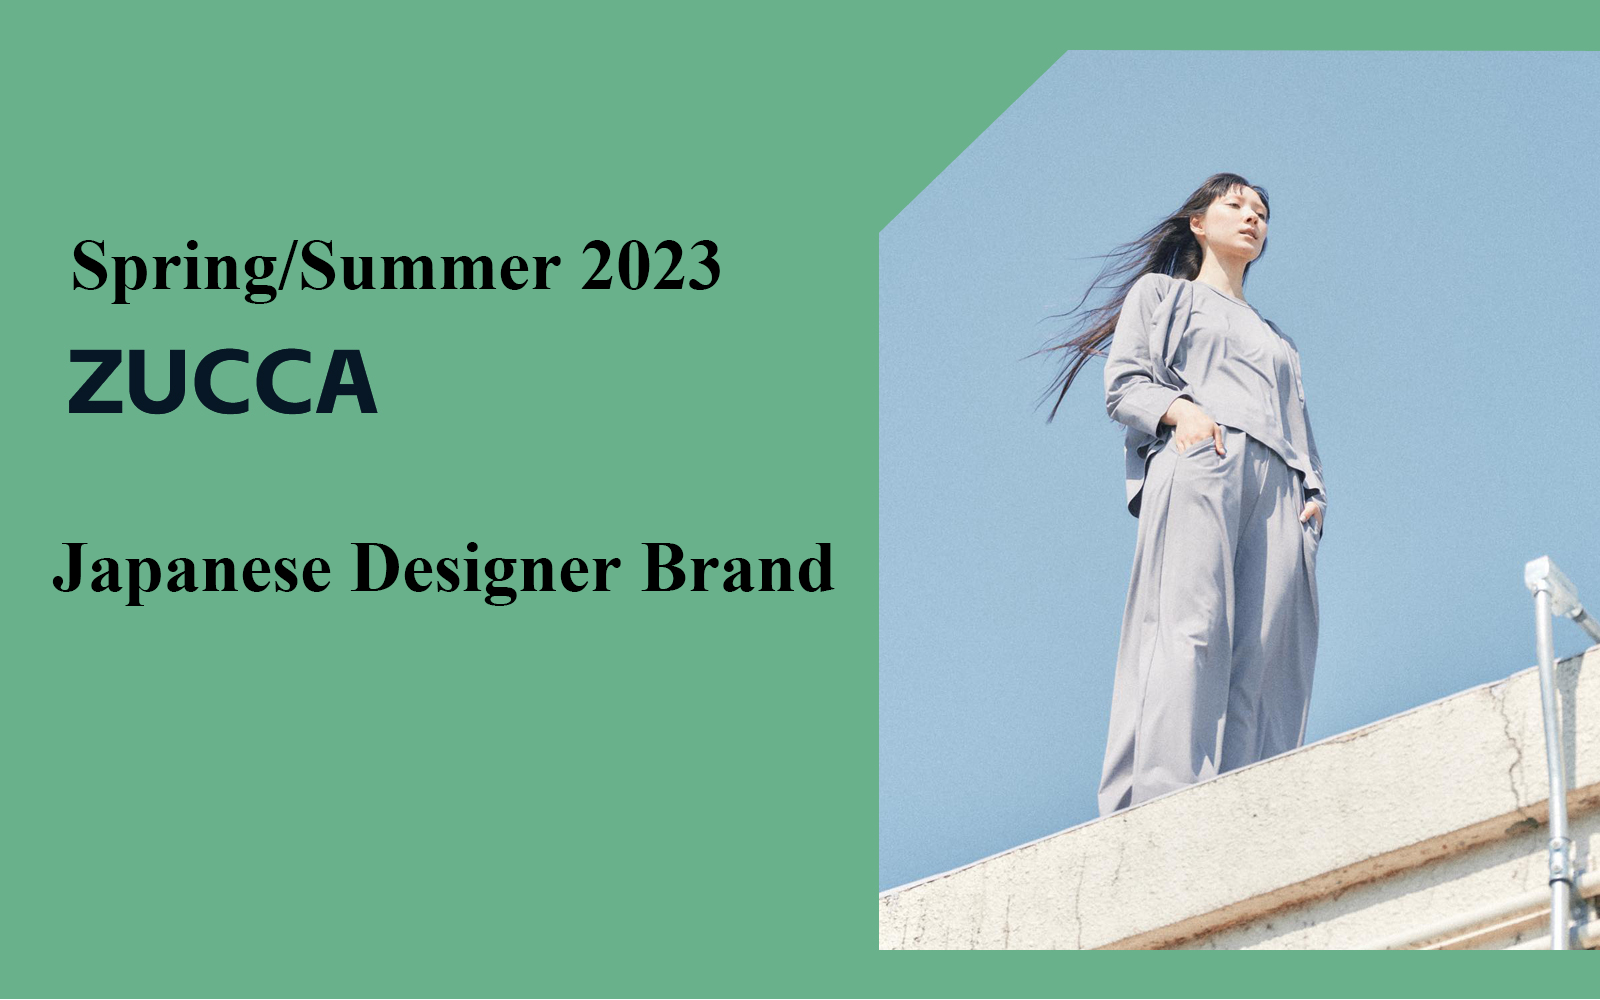 The Analysis of ZUCCa The Japanese Designer Brand